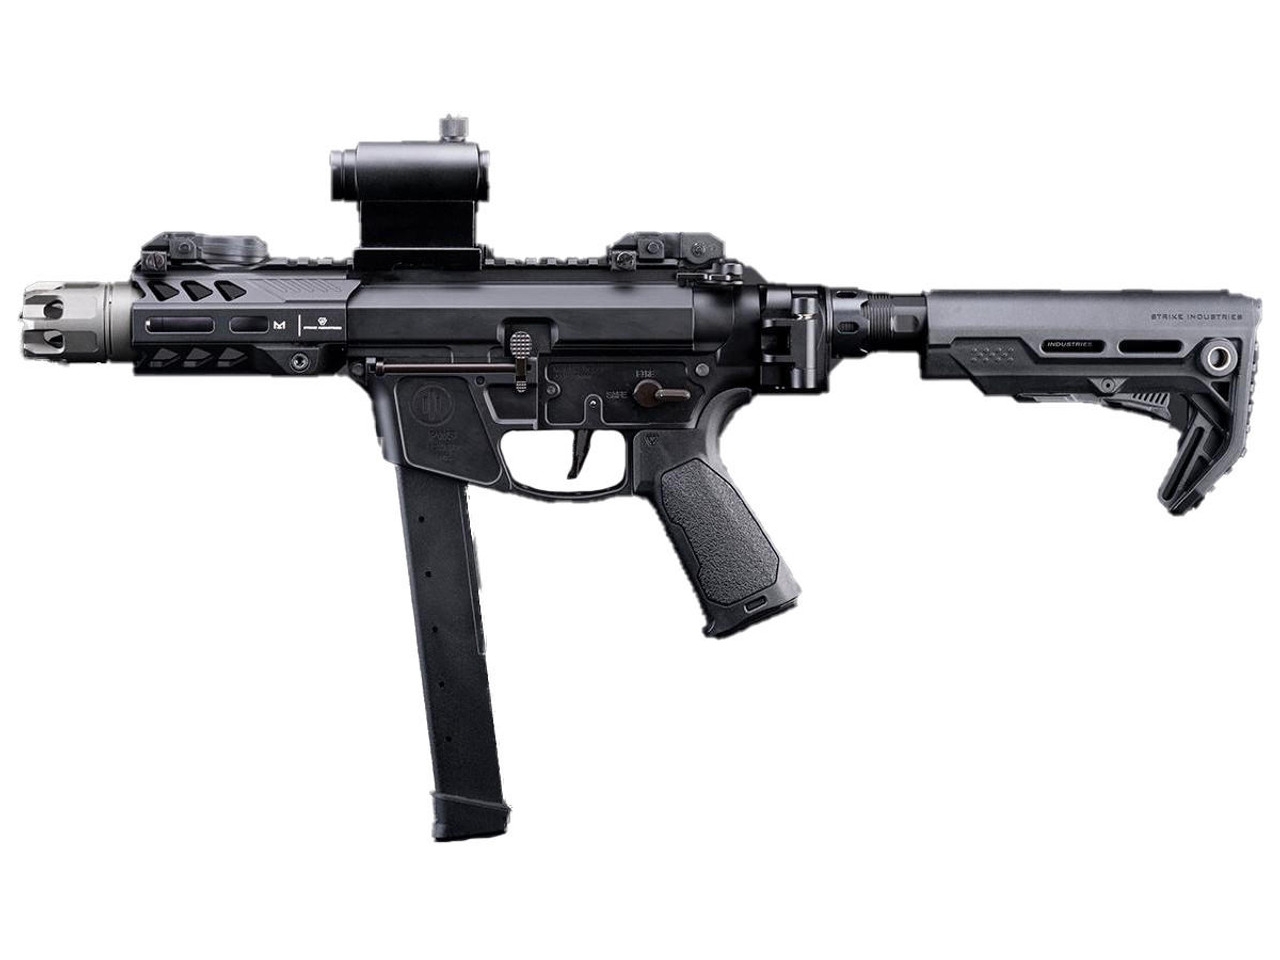 EMG 9mm Style Pistol Caliber Carbine AEG Rifle